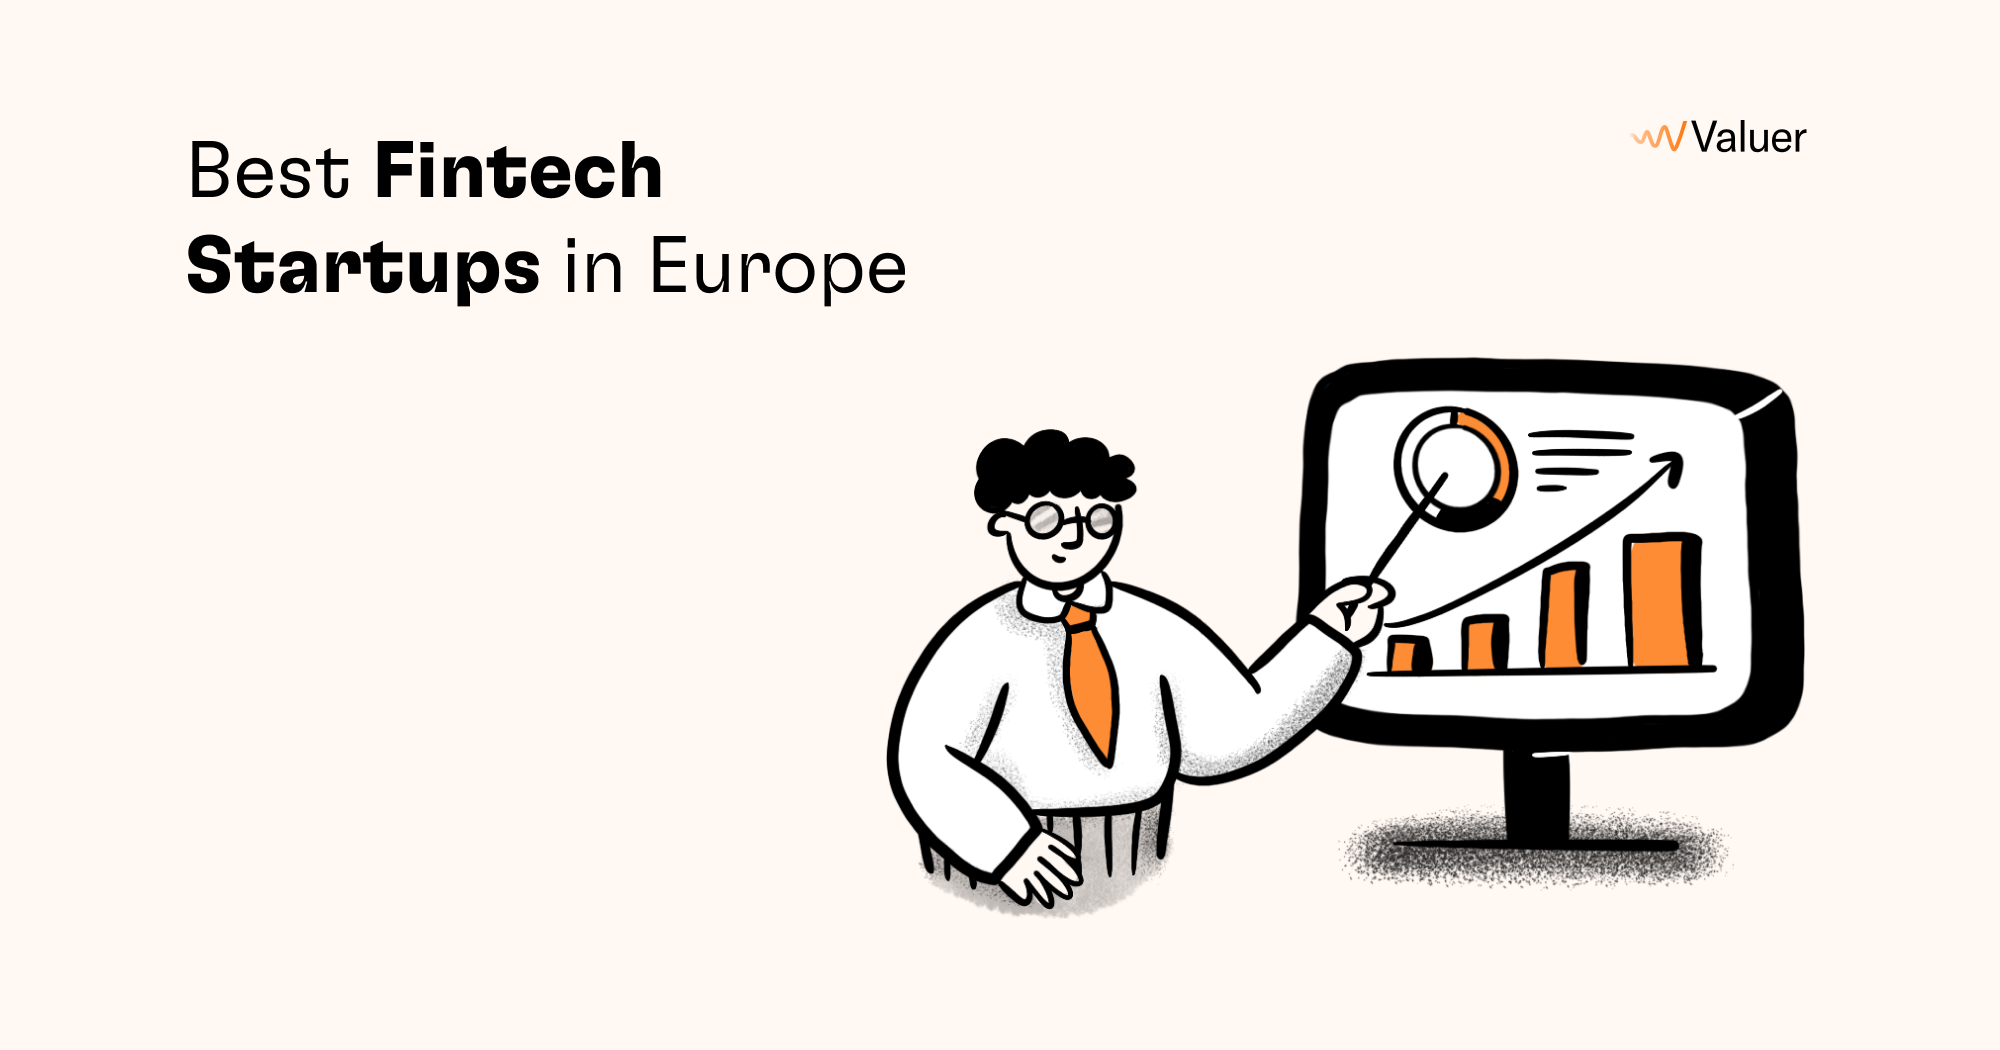 Best Fintech Startups in Europe